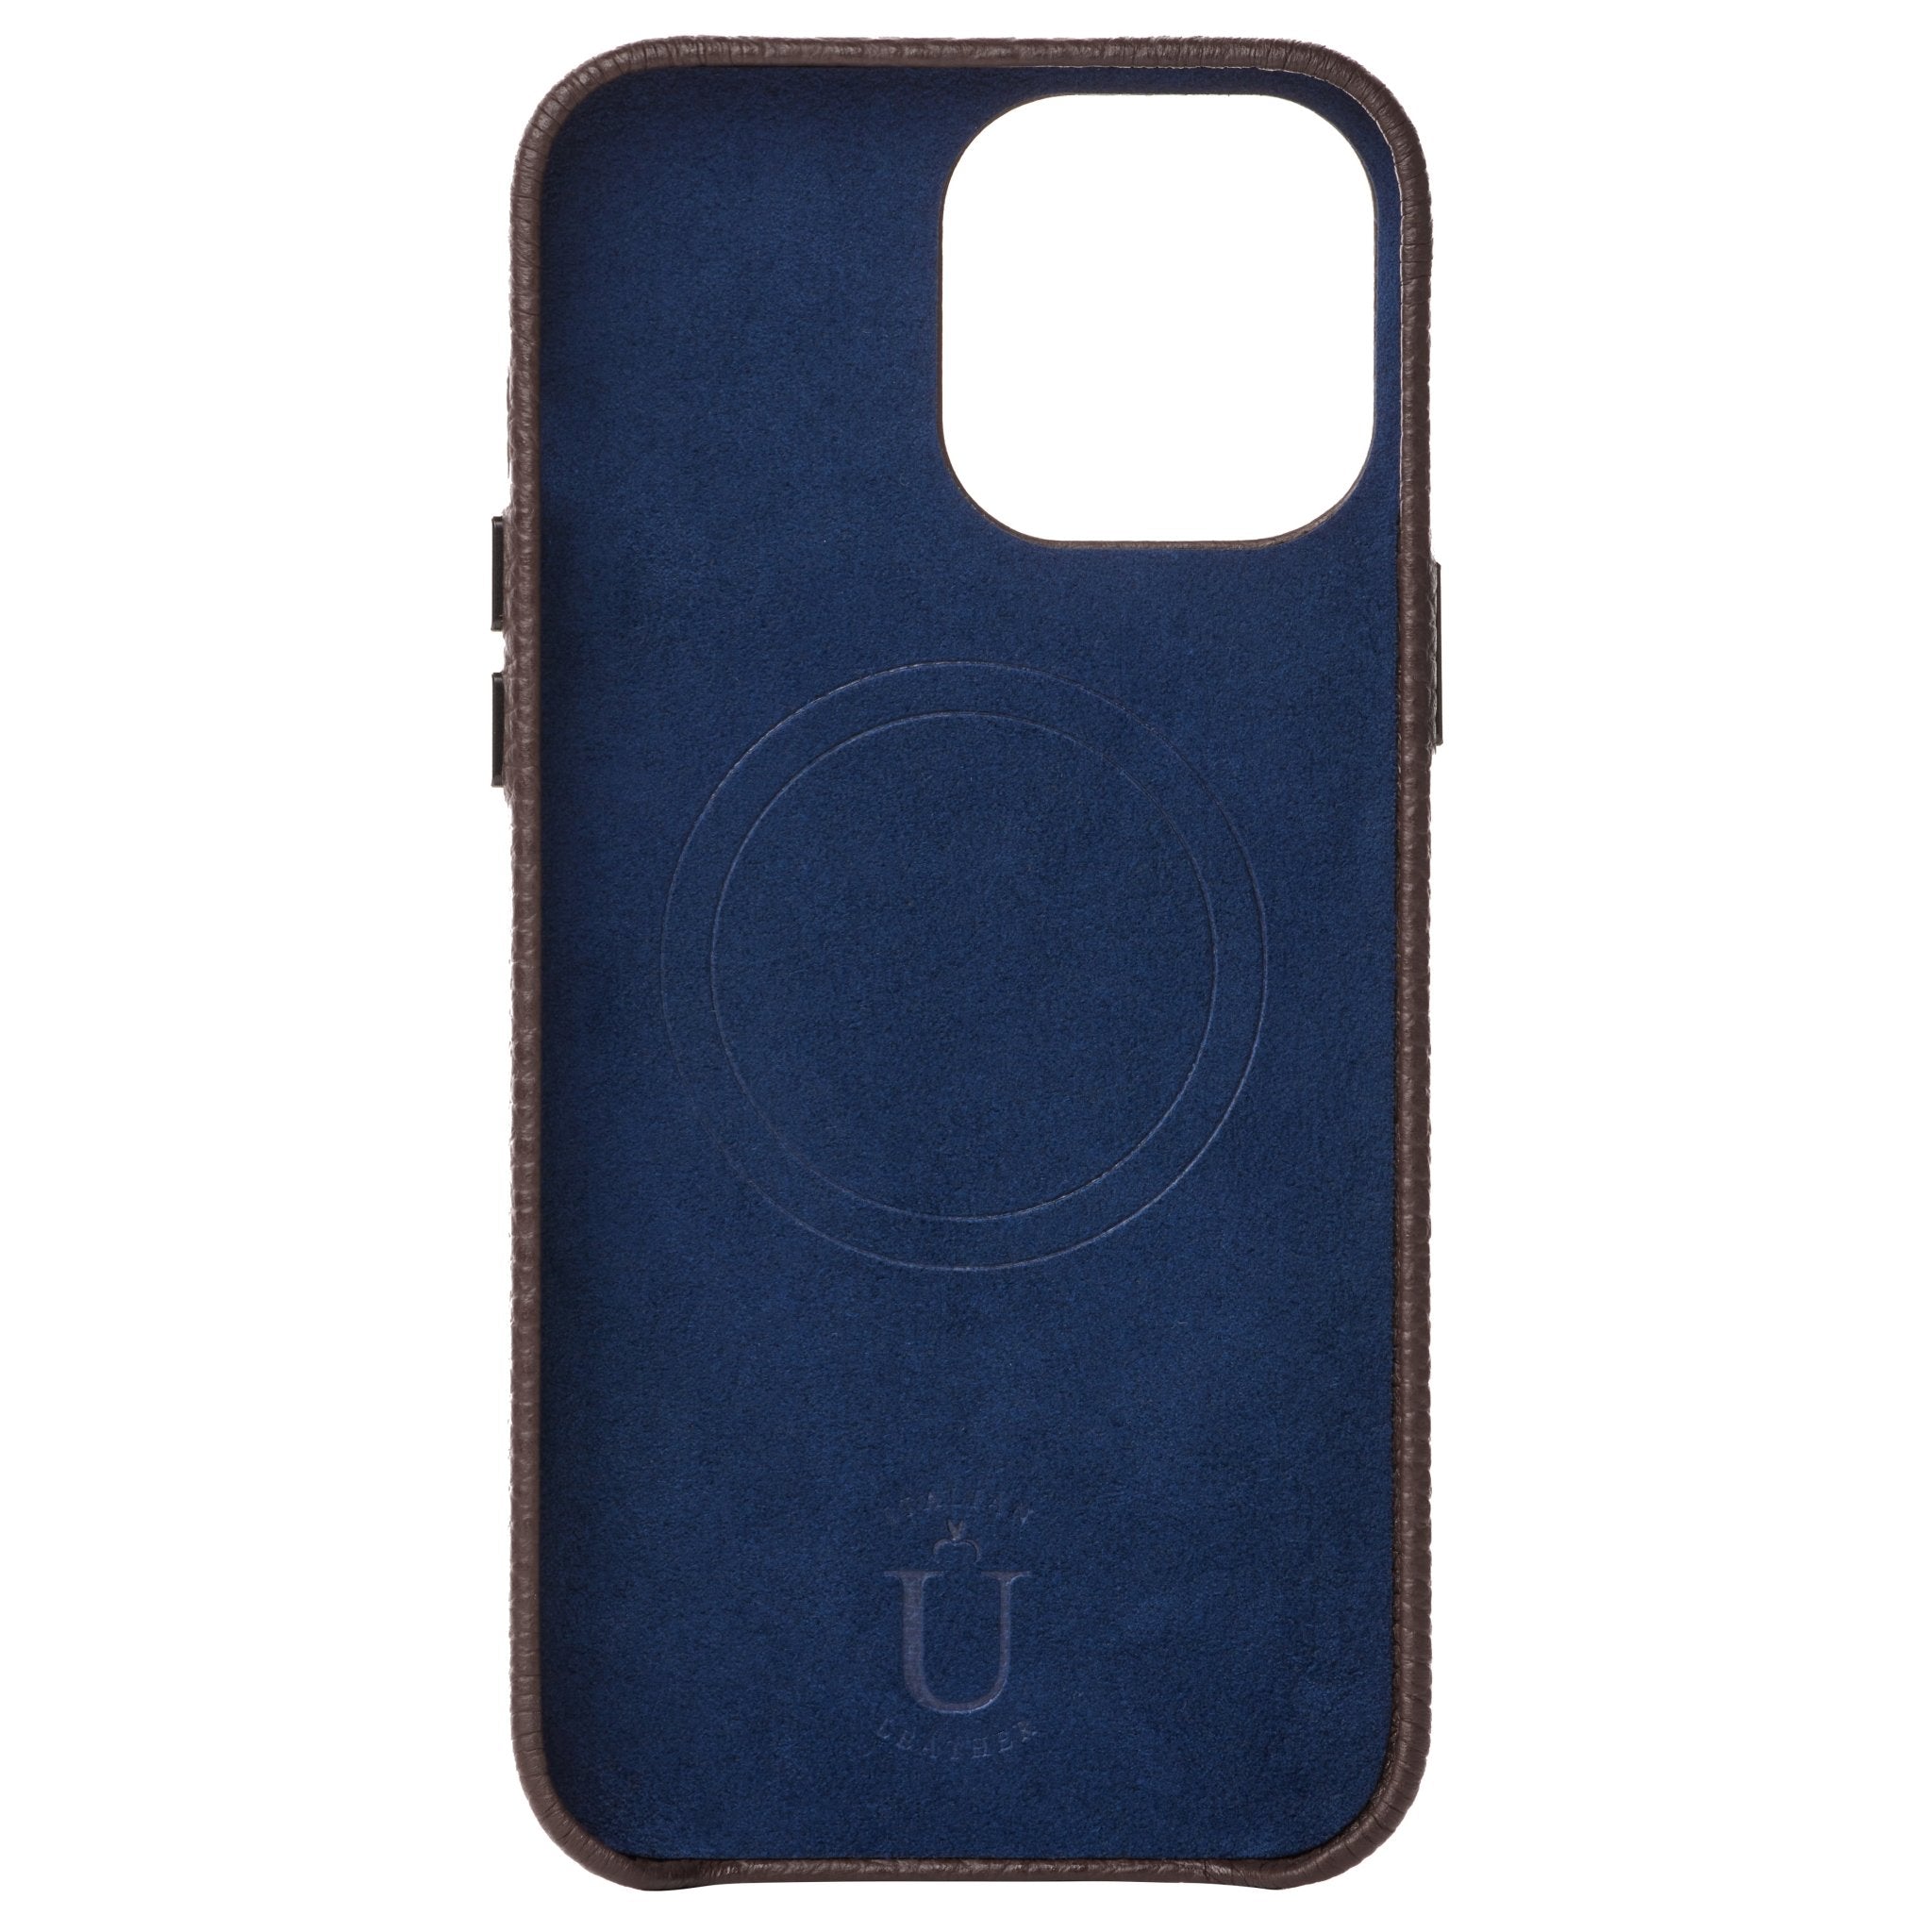 Ubique Italy Luxury iPhone Case 13 Pro Max Pebble Grain Leather Dark Walnut Inner Lining